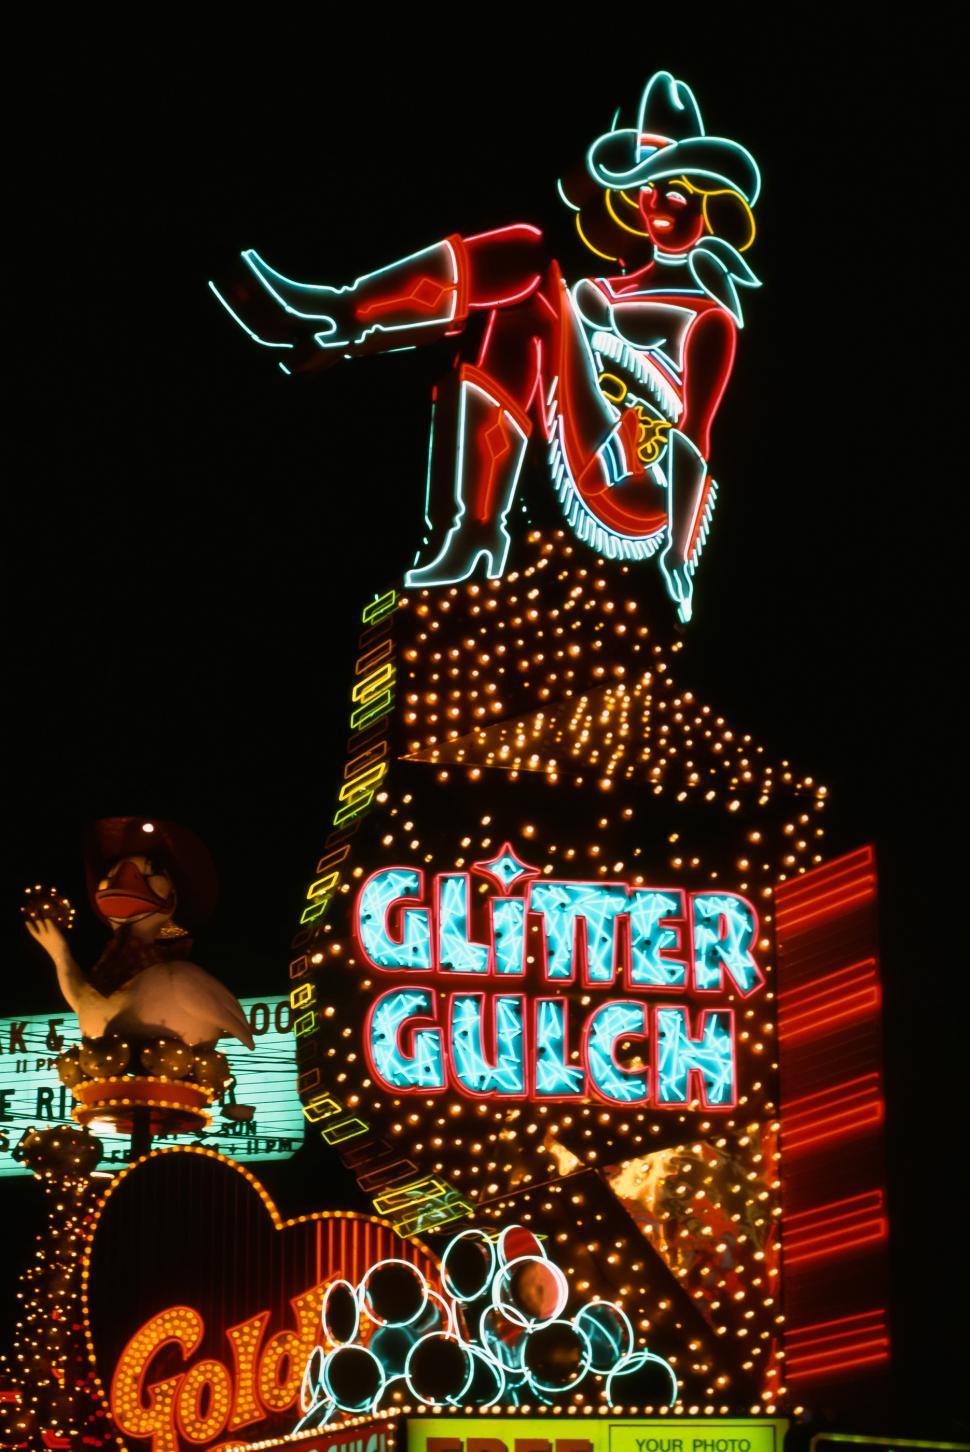 Download Free Stock Photo of Las Vegas Lights 